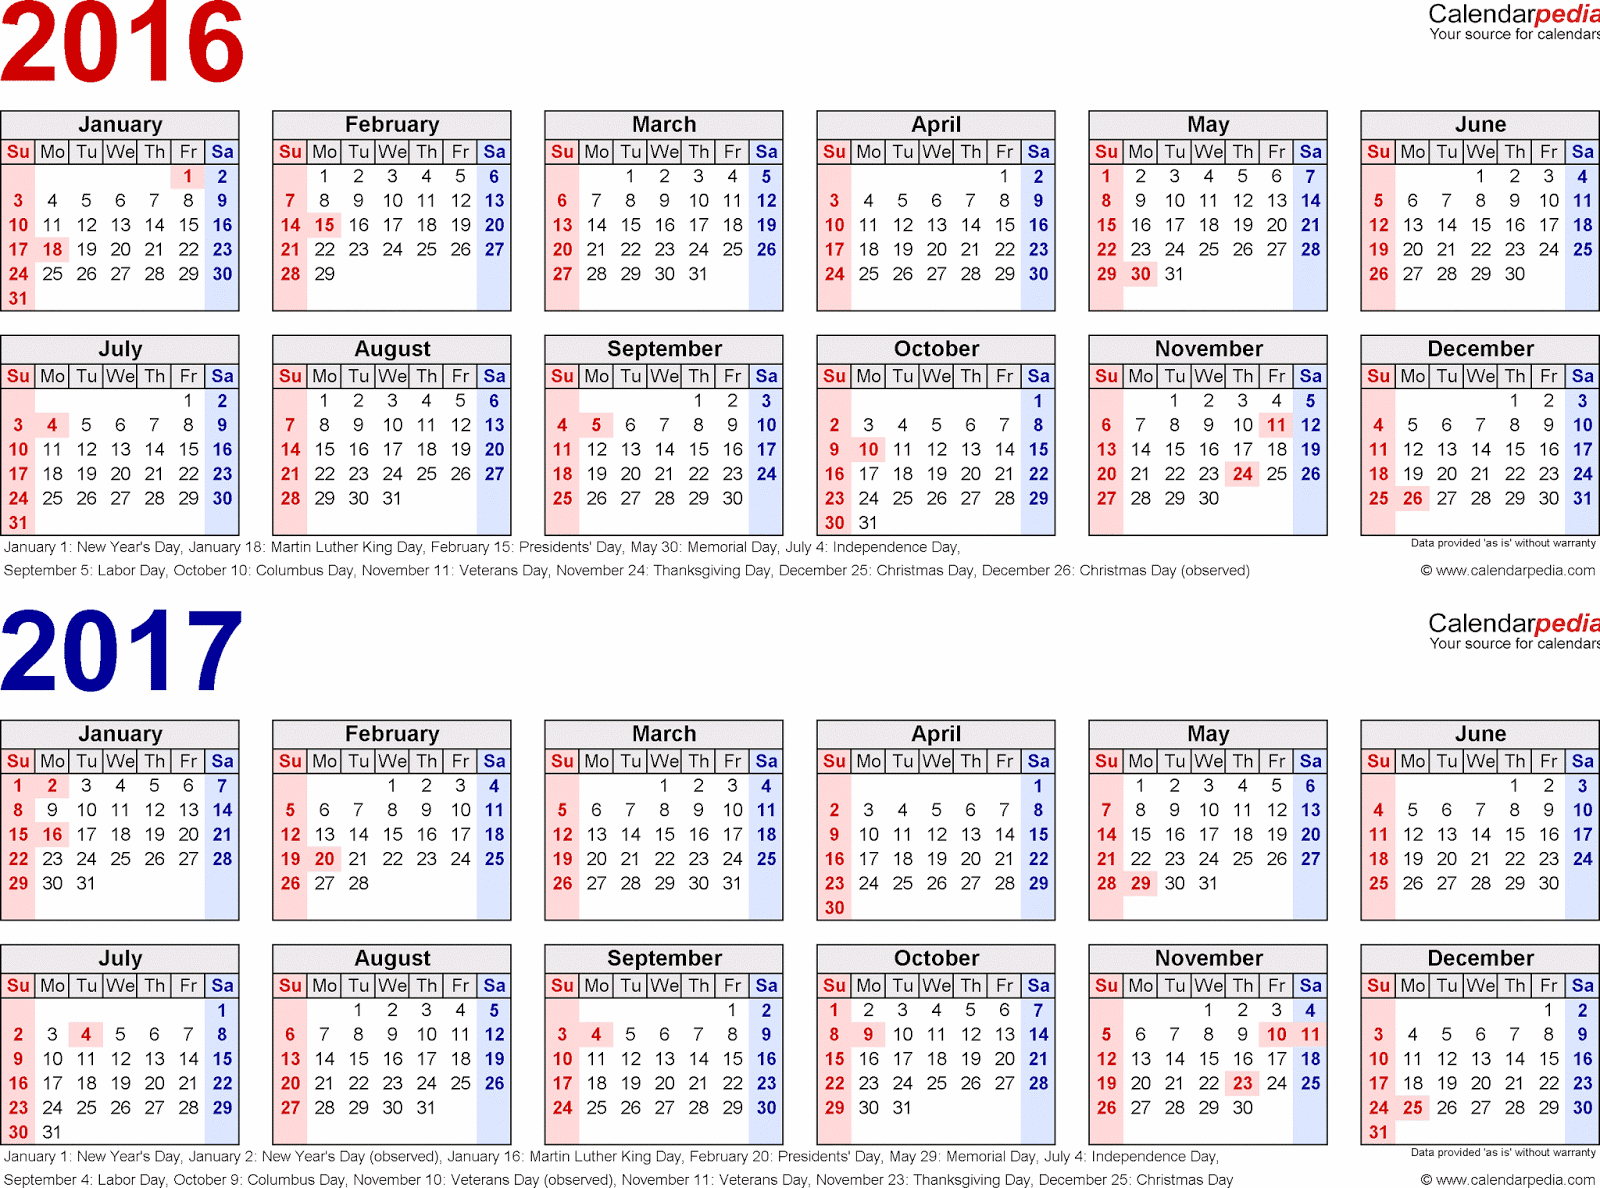 Fiscal Year Calendar Template